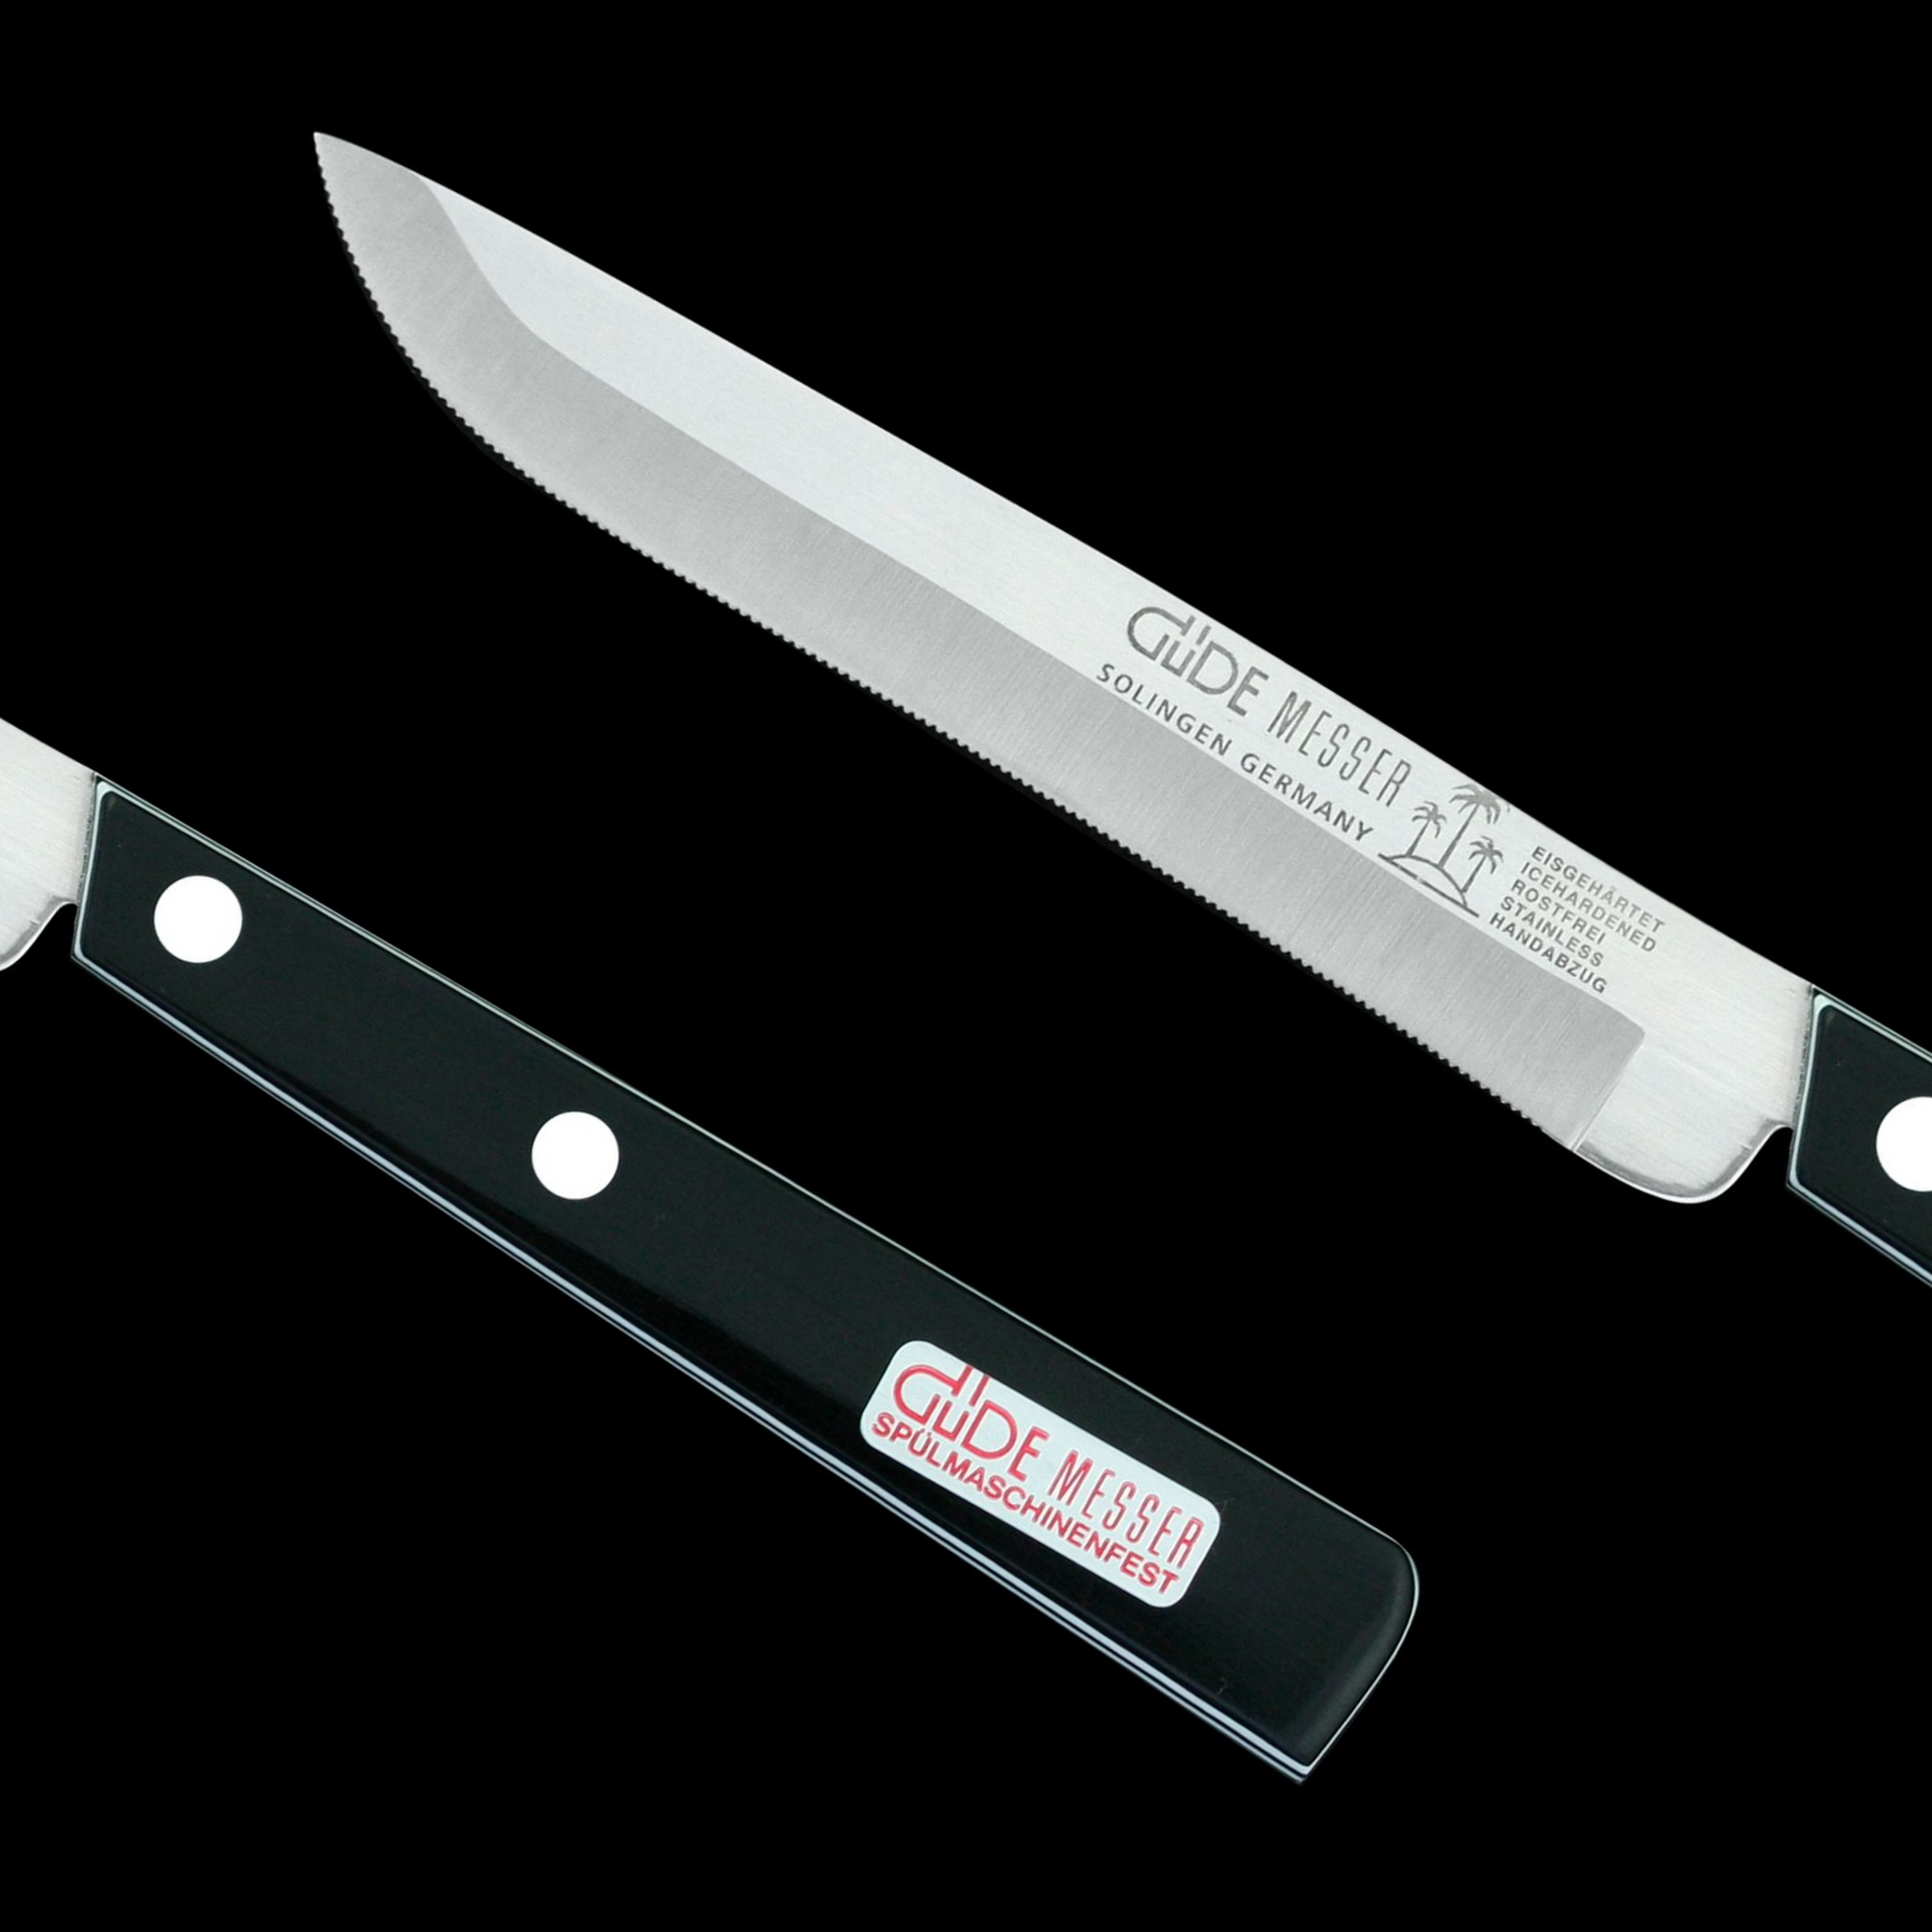 Gude Universal Knife Series 4", Black / White Hostaform Handle and Serrated Blade - GuedeUSA